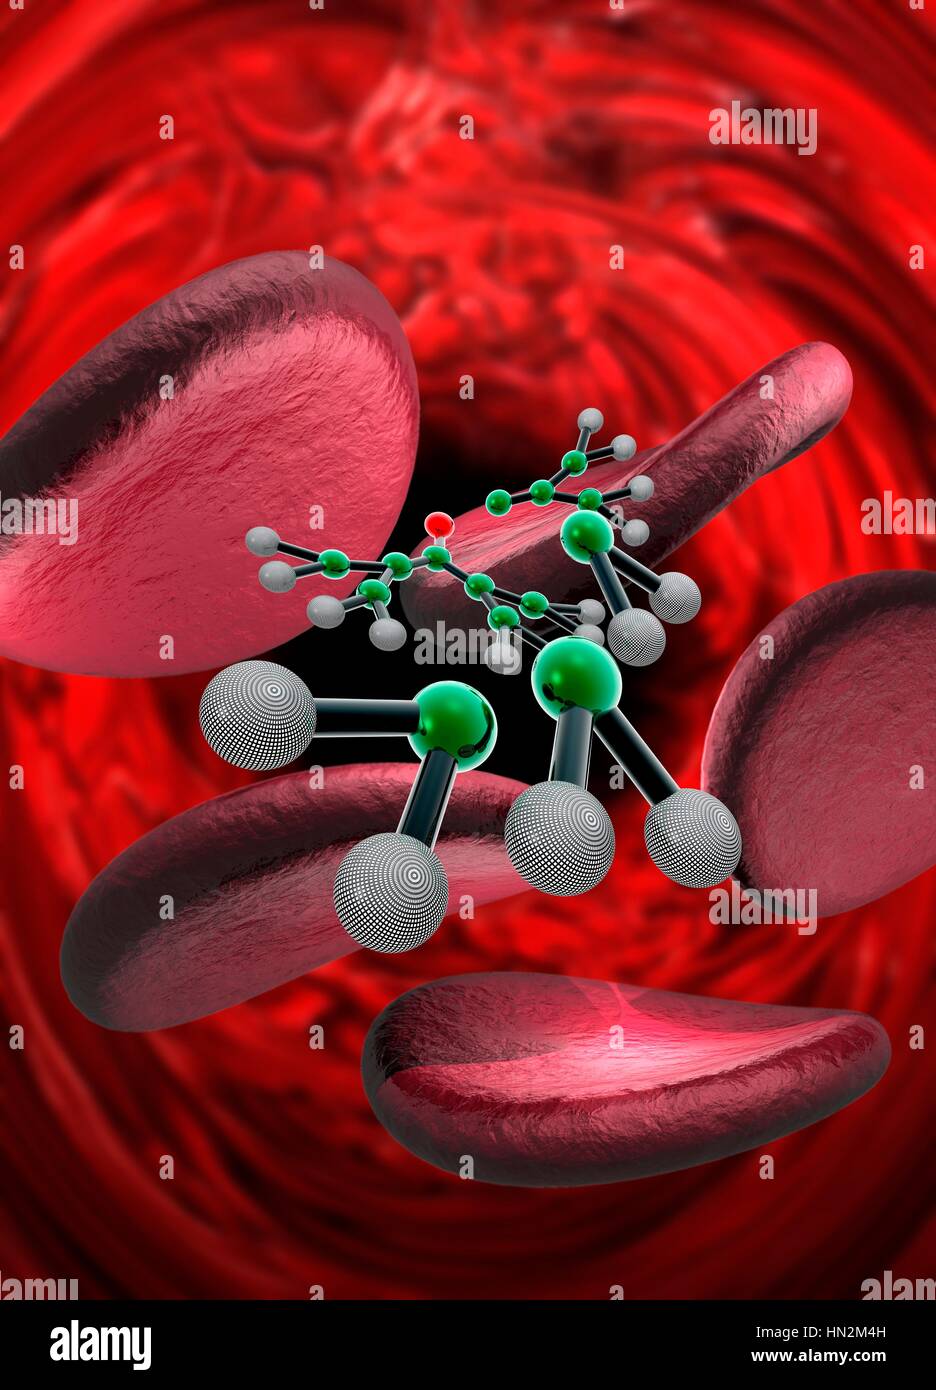 Dendrimers in human bloodstream, illustration. Stock Photo